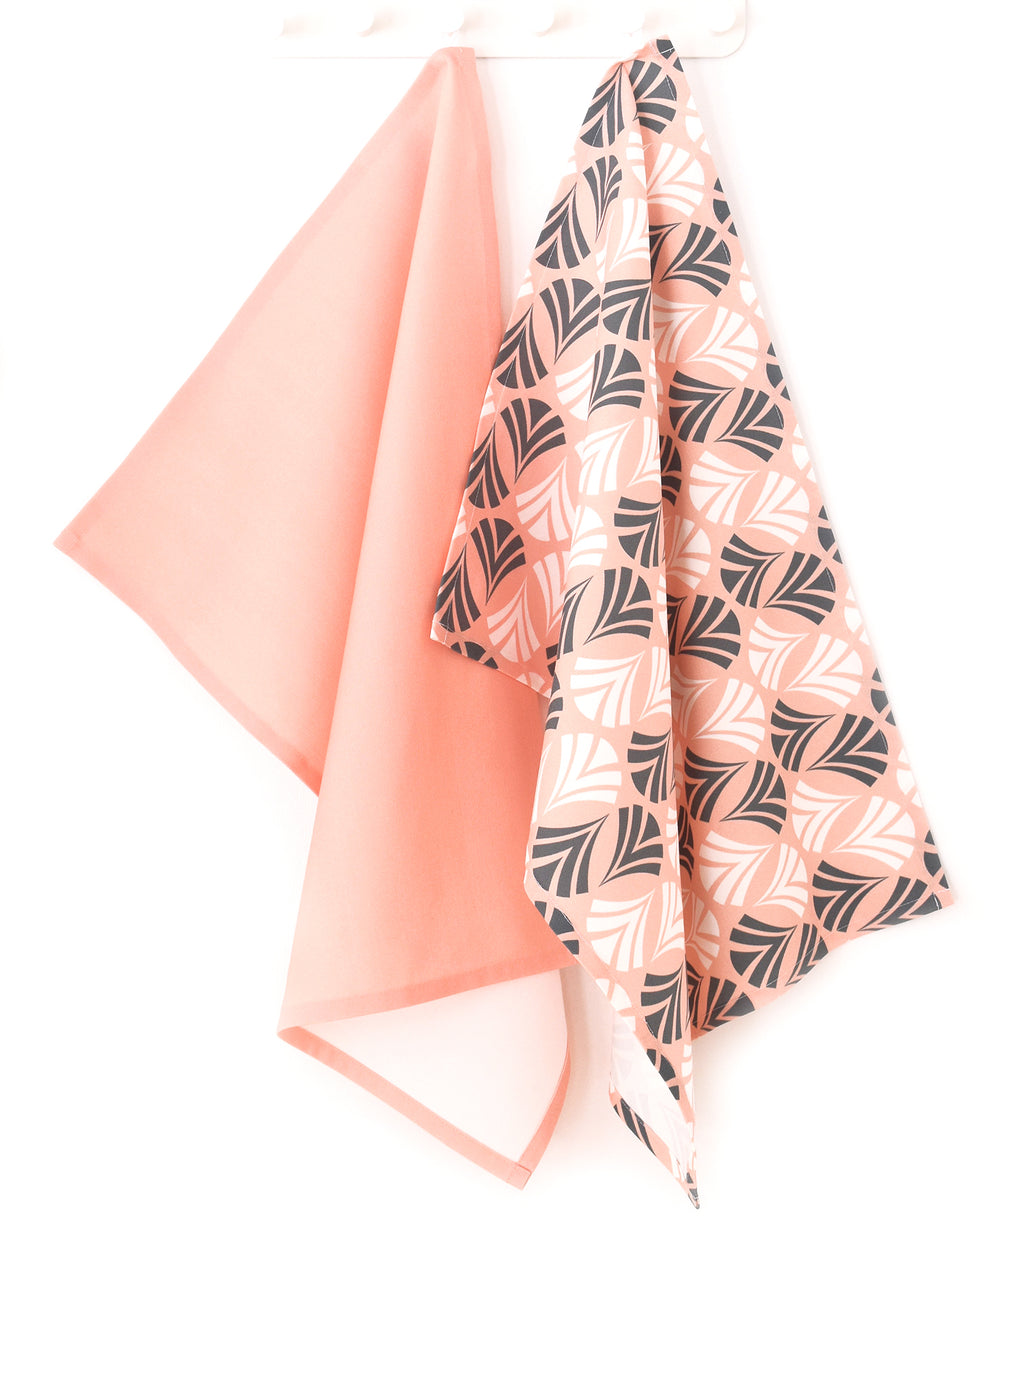 Waltz Linen Cotton Tea Towel (18.5x25) – Set of 2 (Patterned Salmon & Solid Salmon)